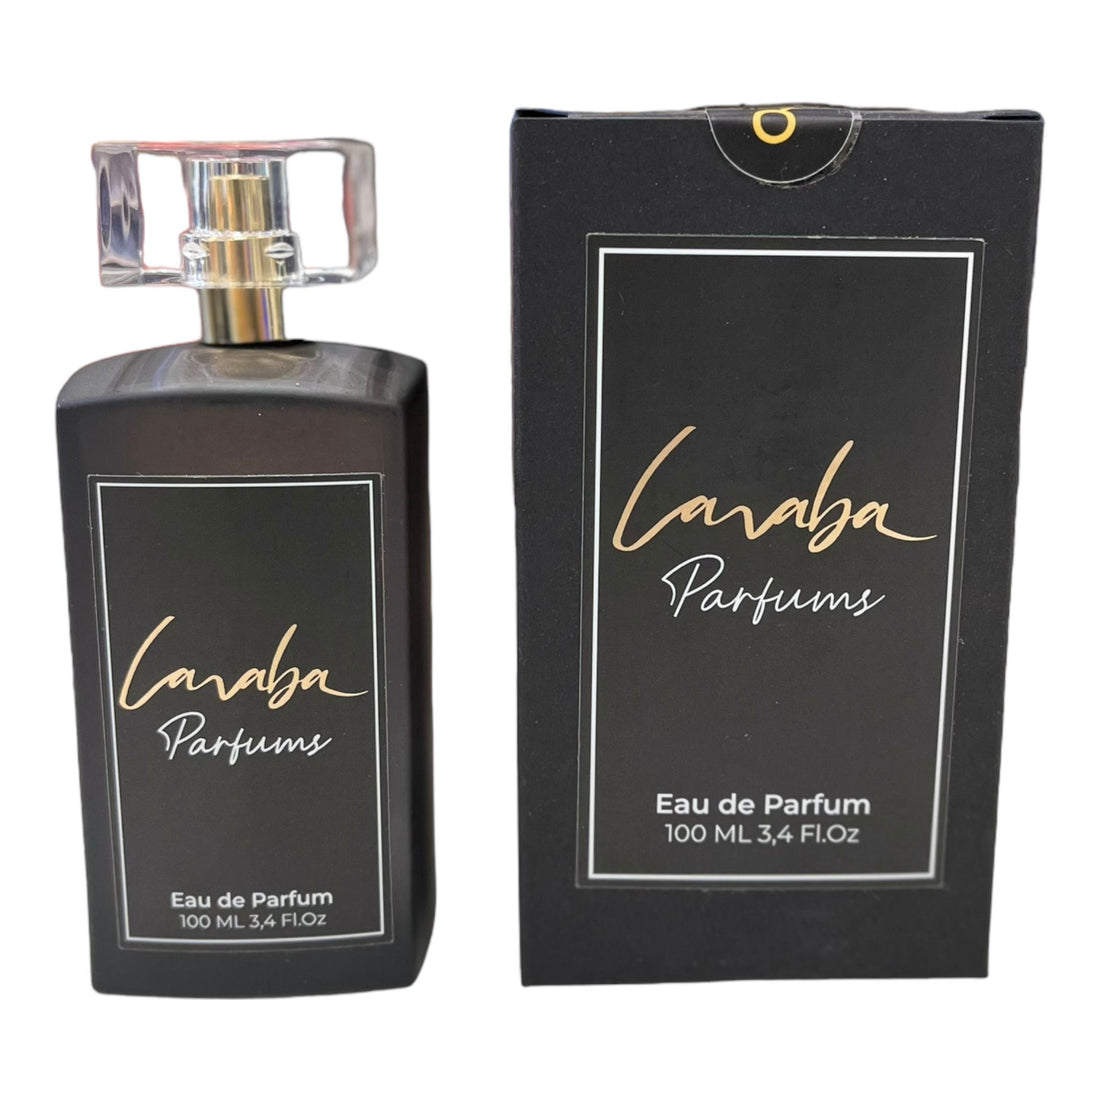 Pack de Perfumes Caraba_ Bcn